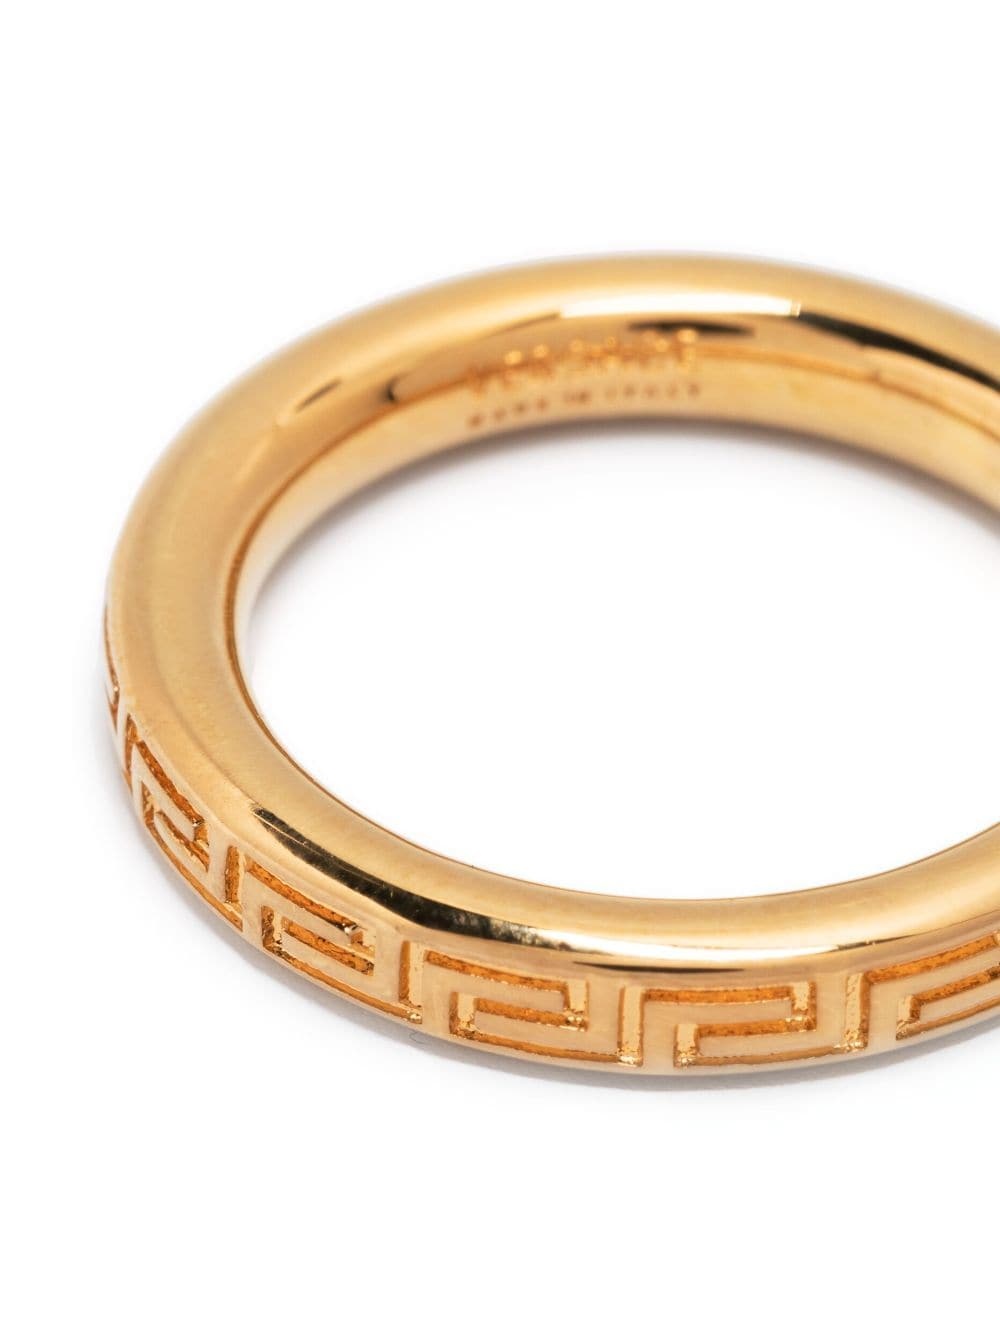 Greca engraved ring - 3